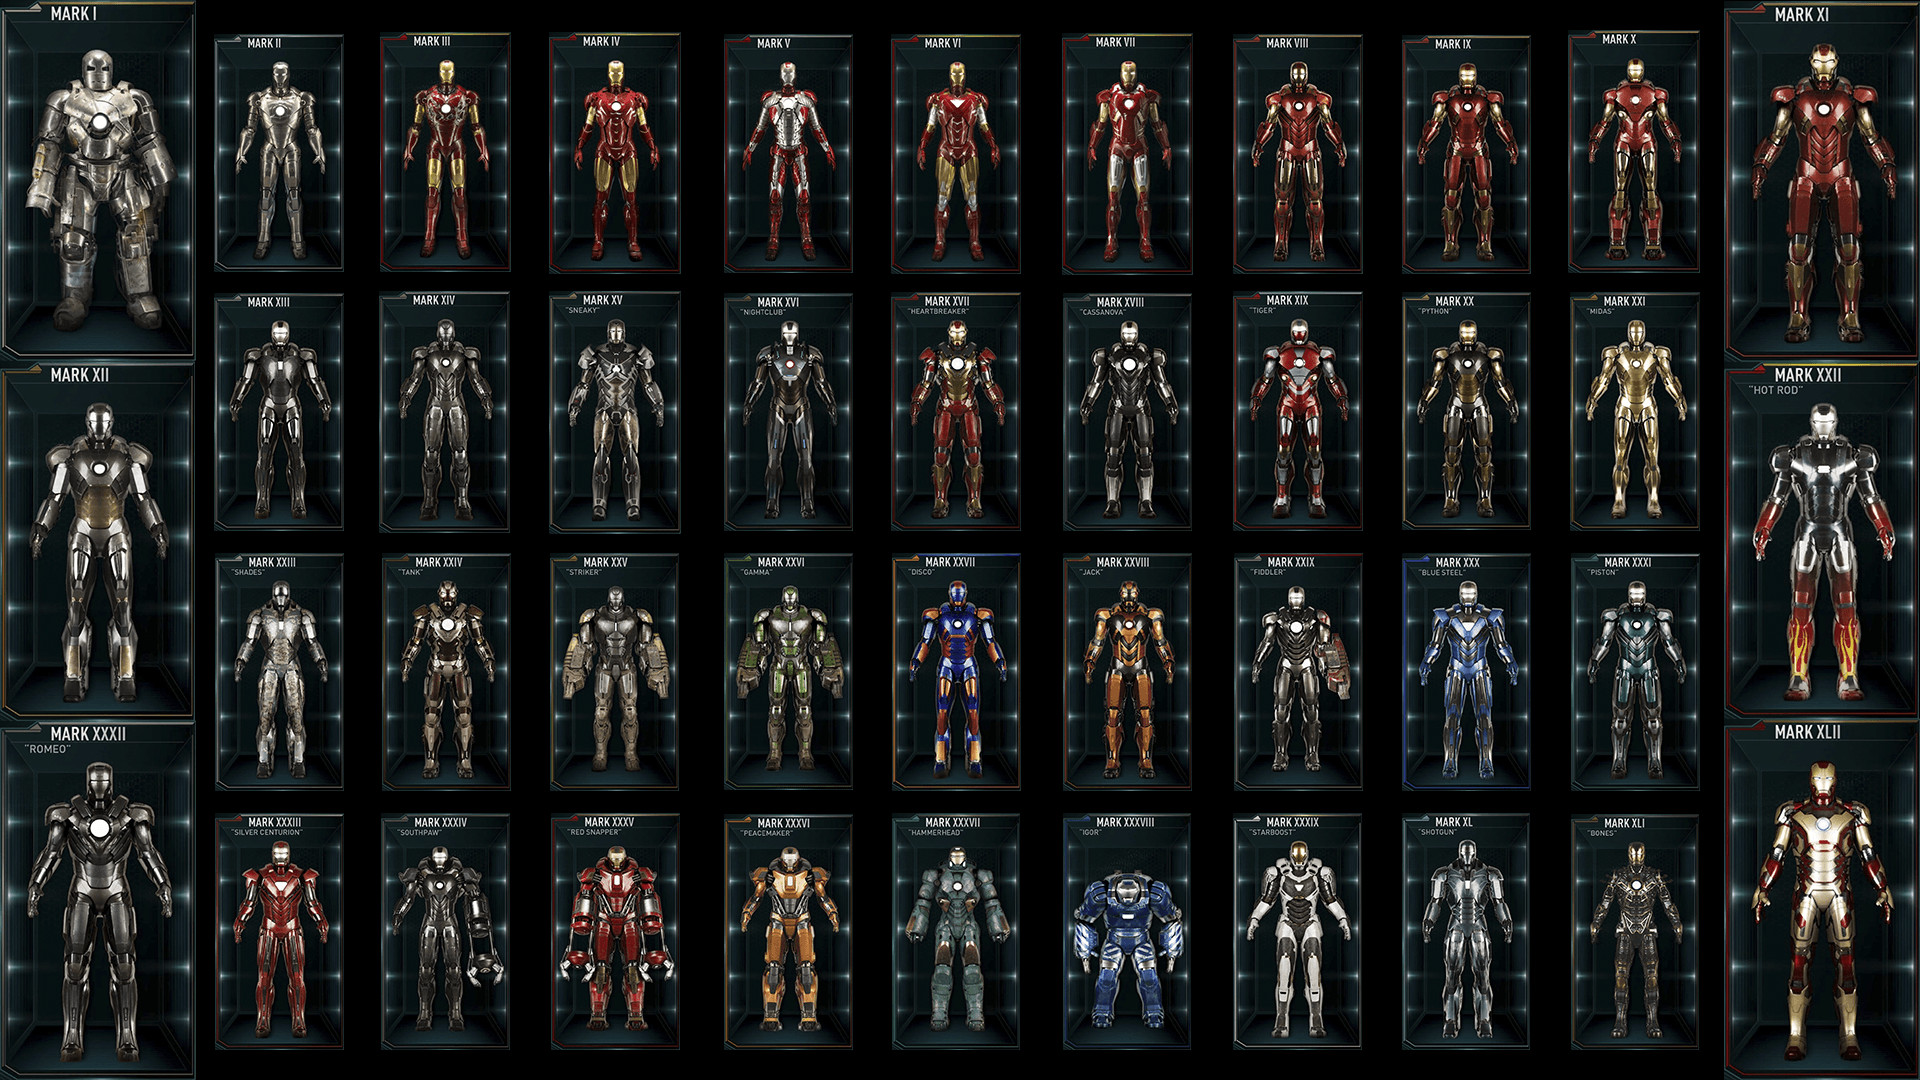 Iron Man Mark 53 Wallpapers